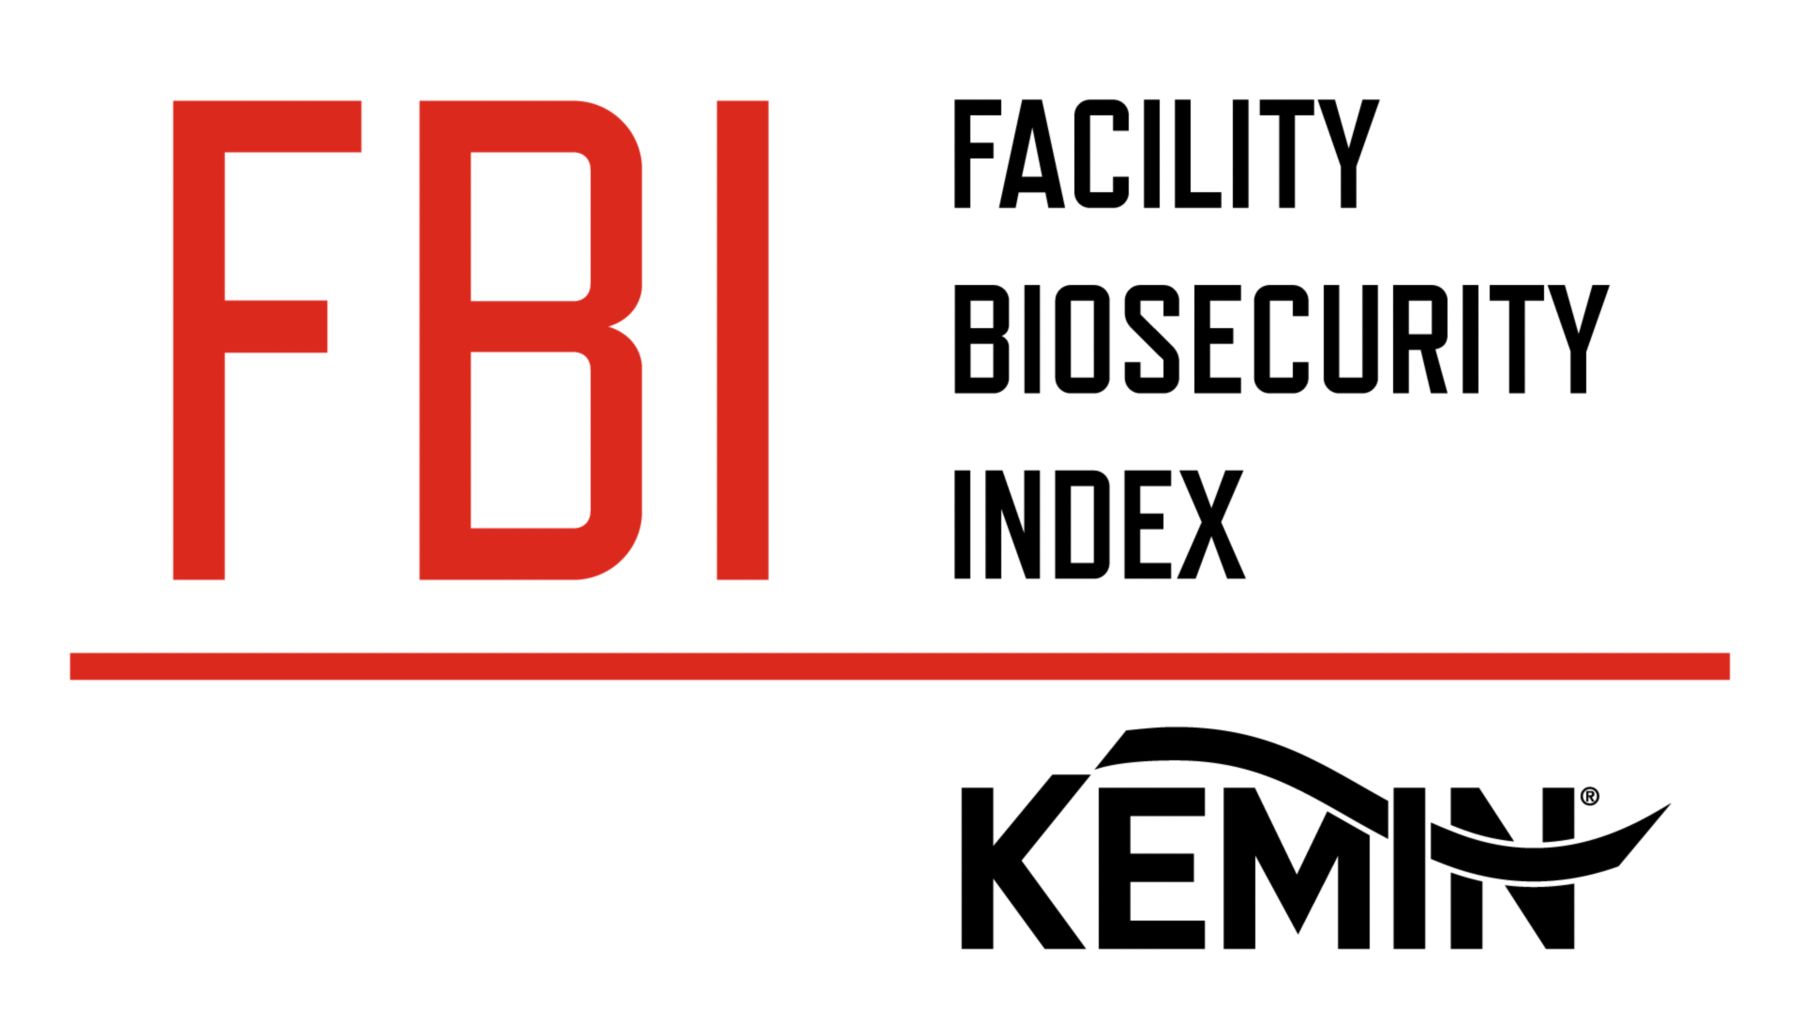 Facility Biosecurity Index